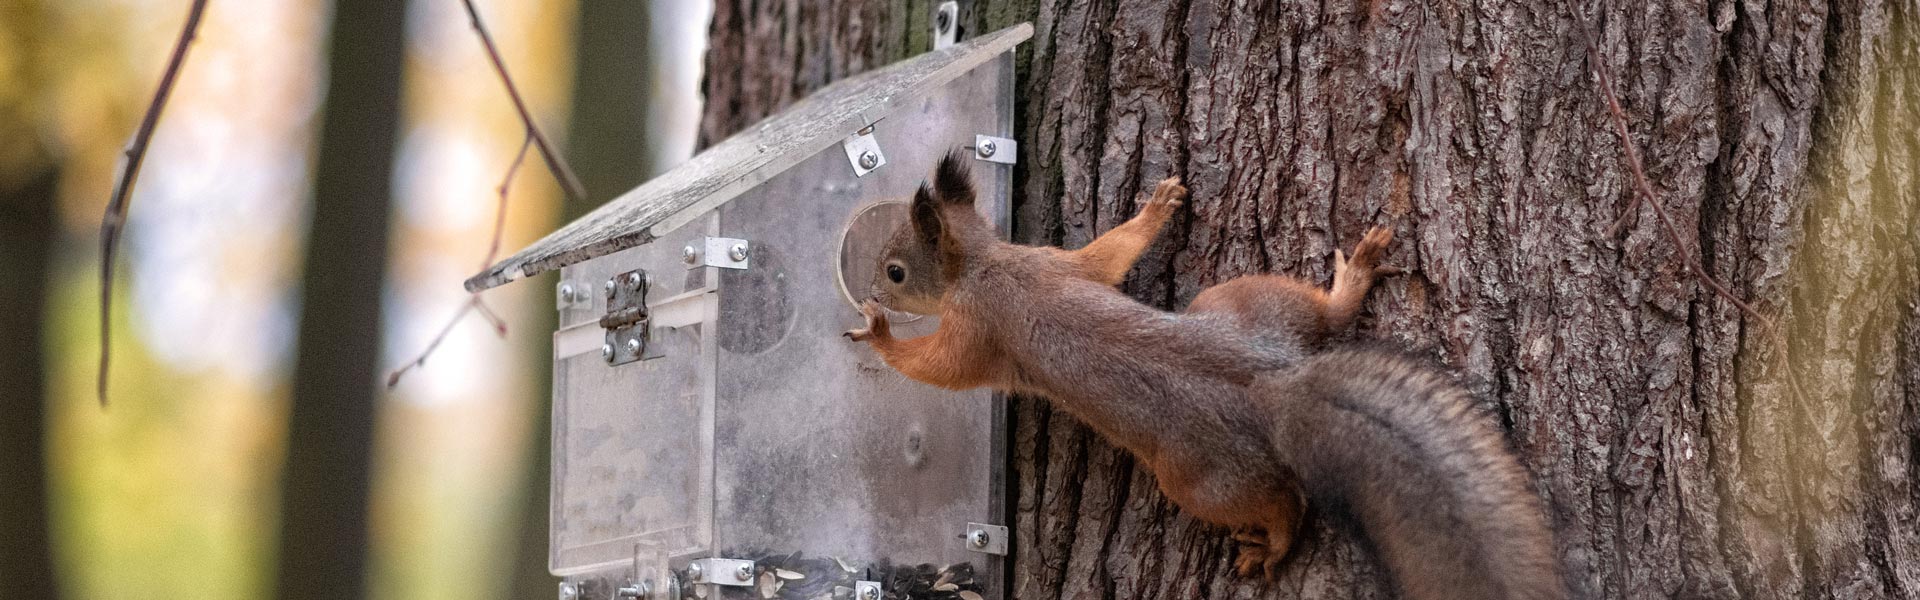 Tree squirrel at feeder